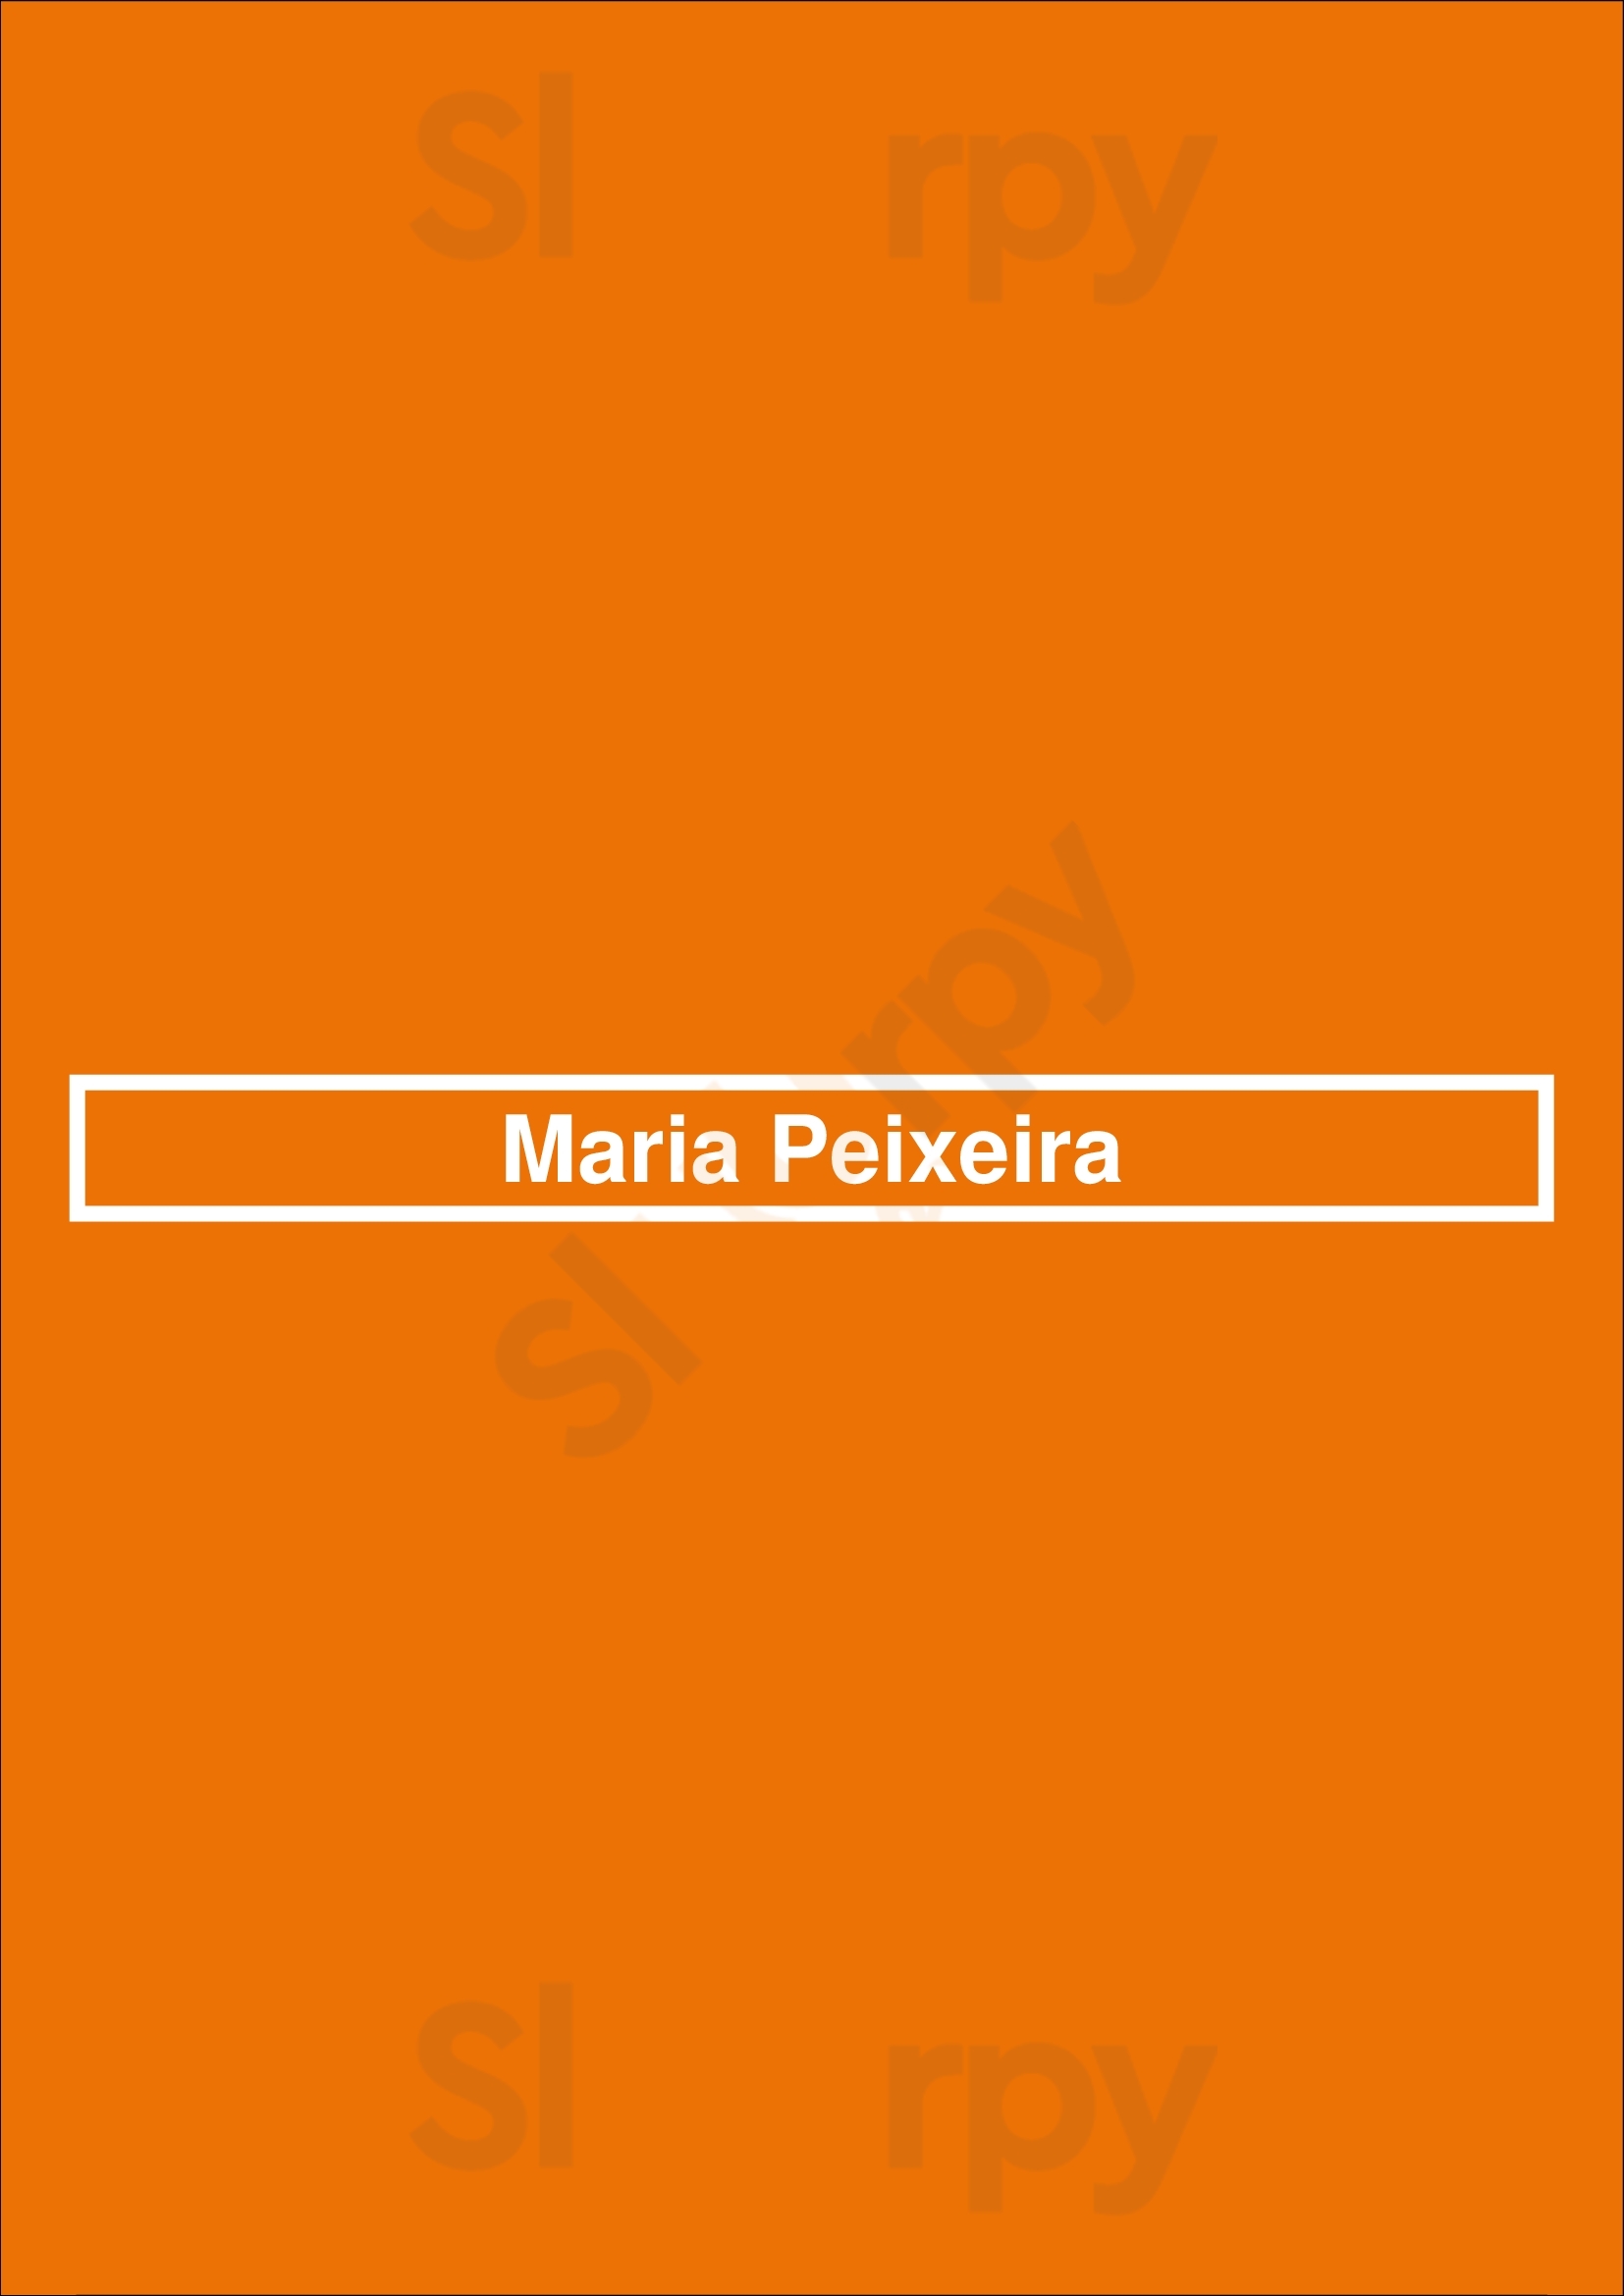 Maria Peixeira Lisboa Menu - 1